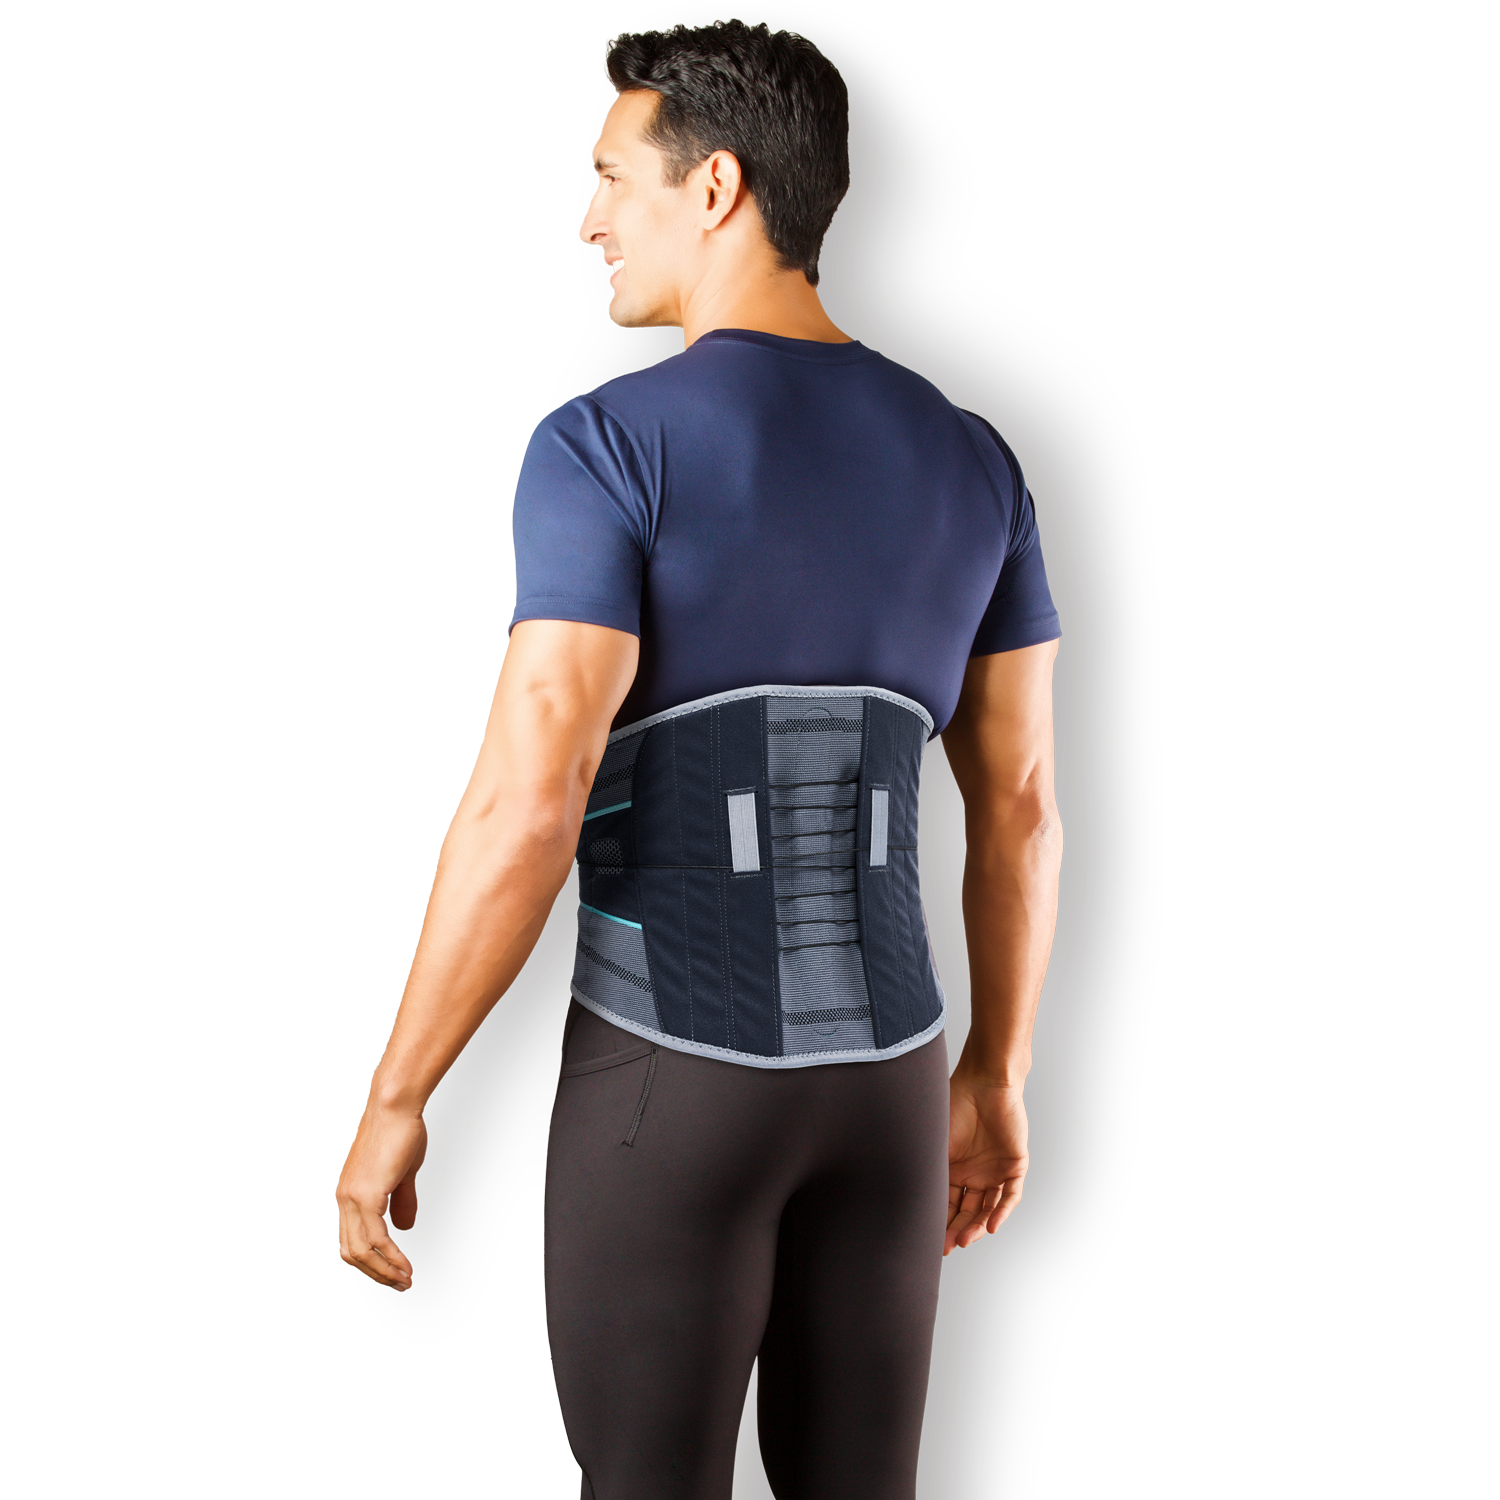 Aspen Elite Active+ - Precision-Designed Lower Back Pain Relief